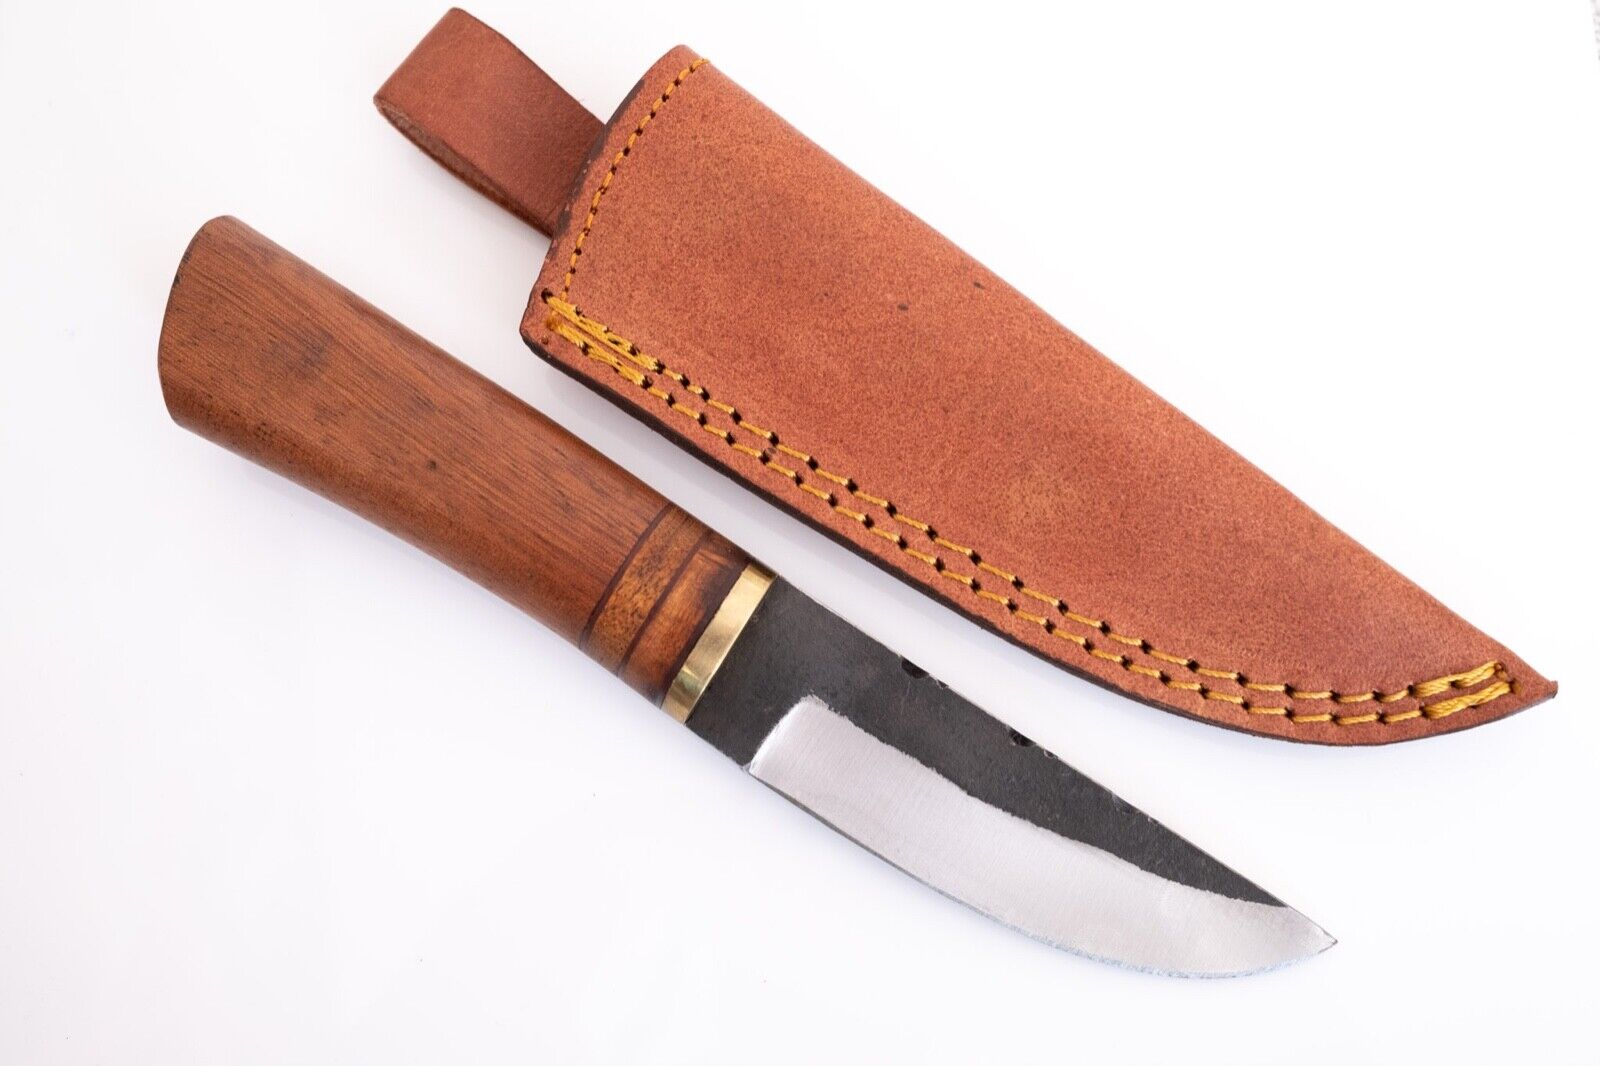 Puukko Knife Wood Handle Carbon Steel Forged Blade 9